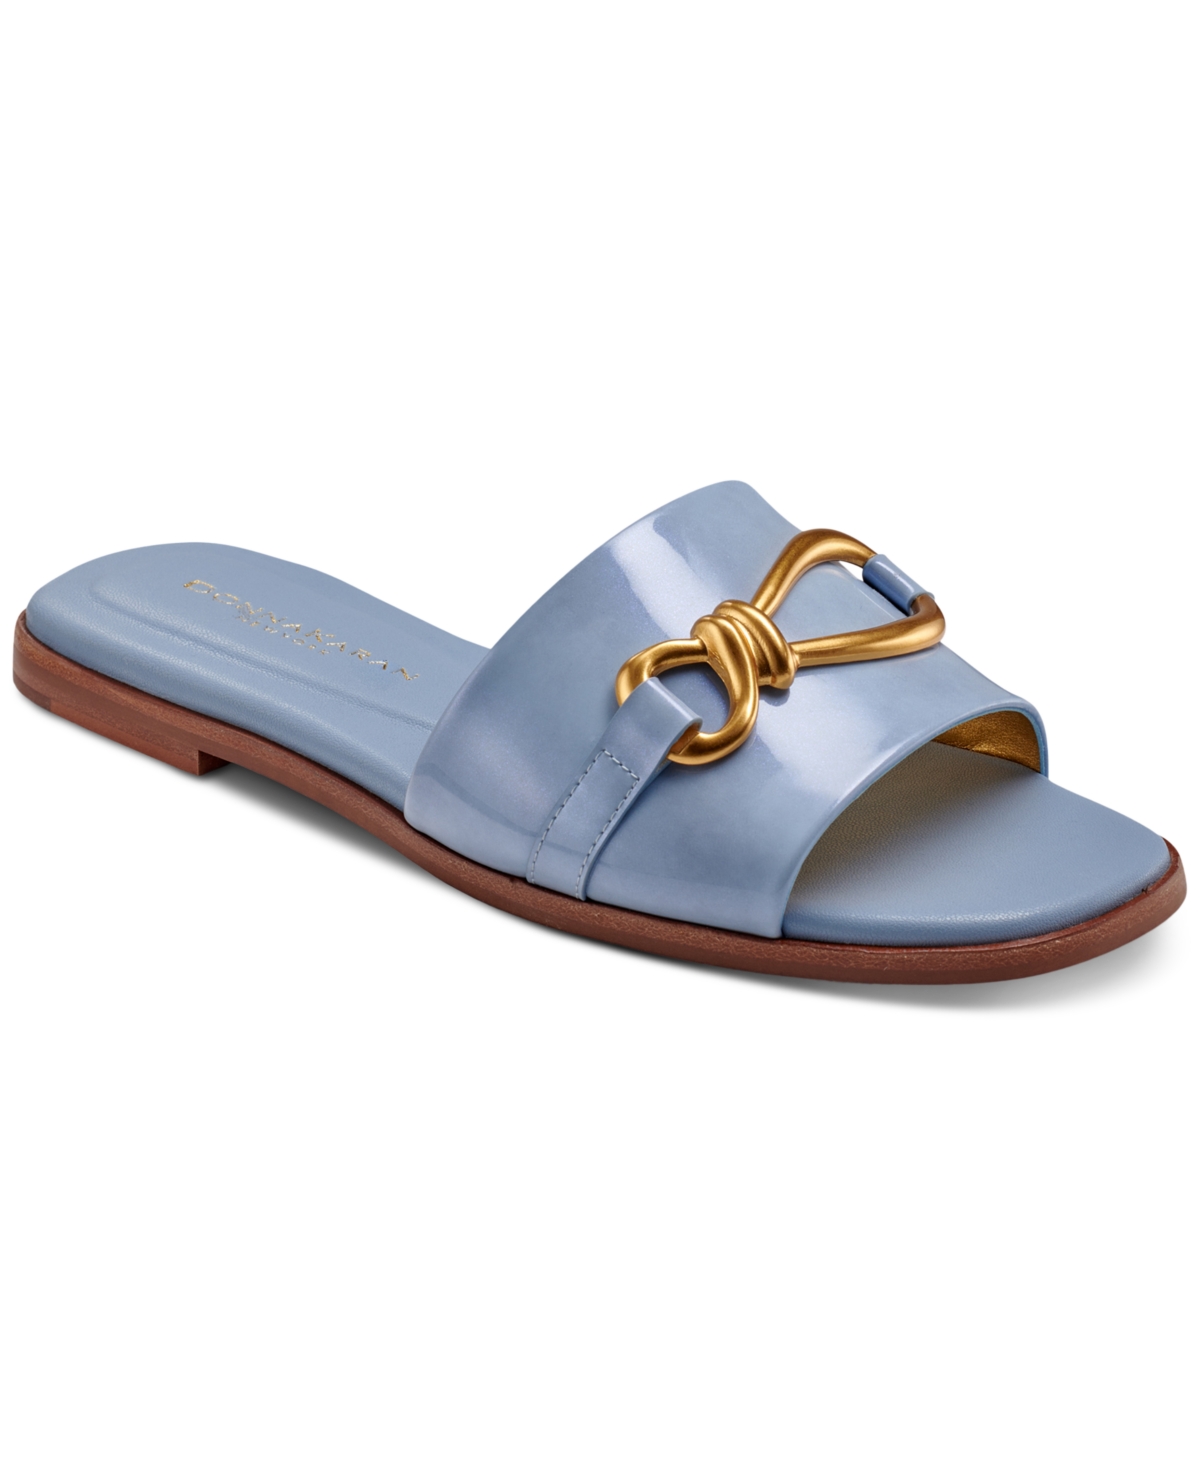 Haylen Hardware Slide Sandals - Blue Frost